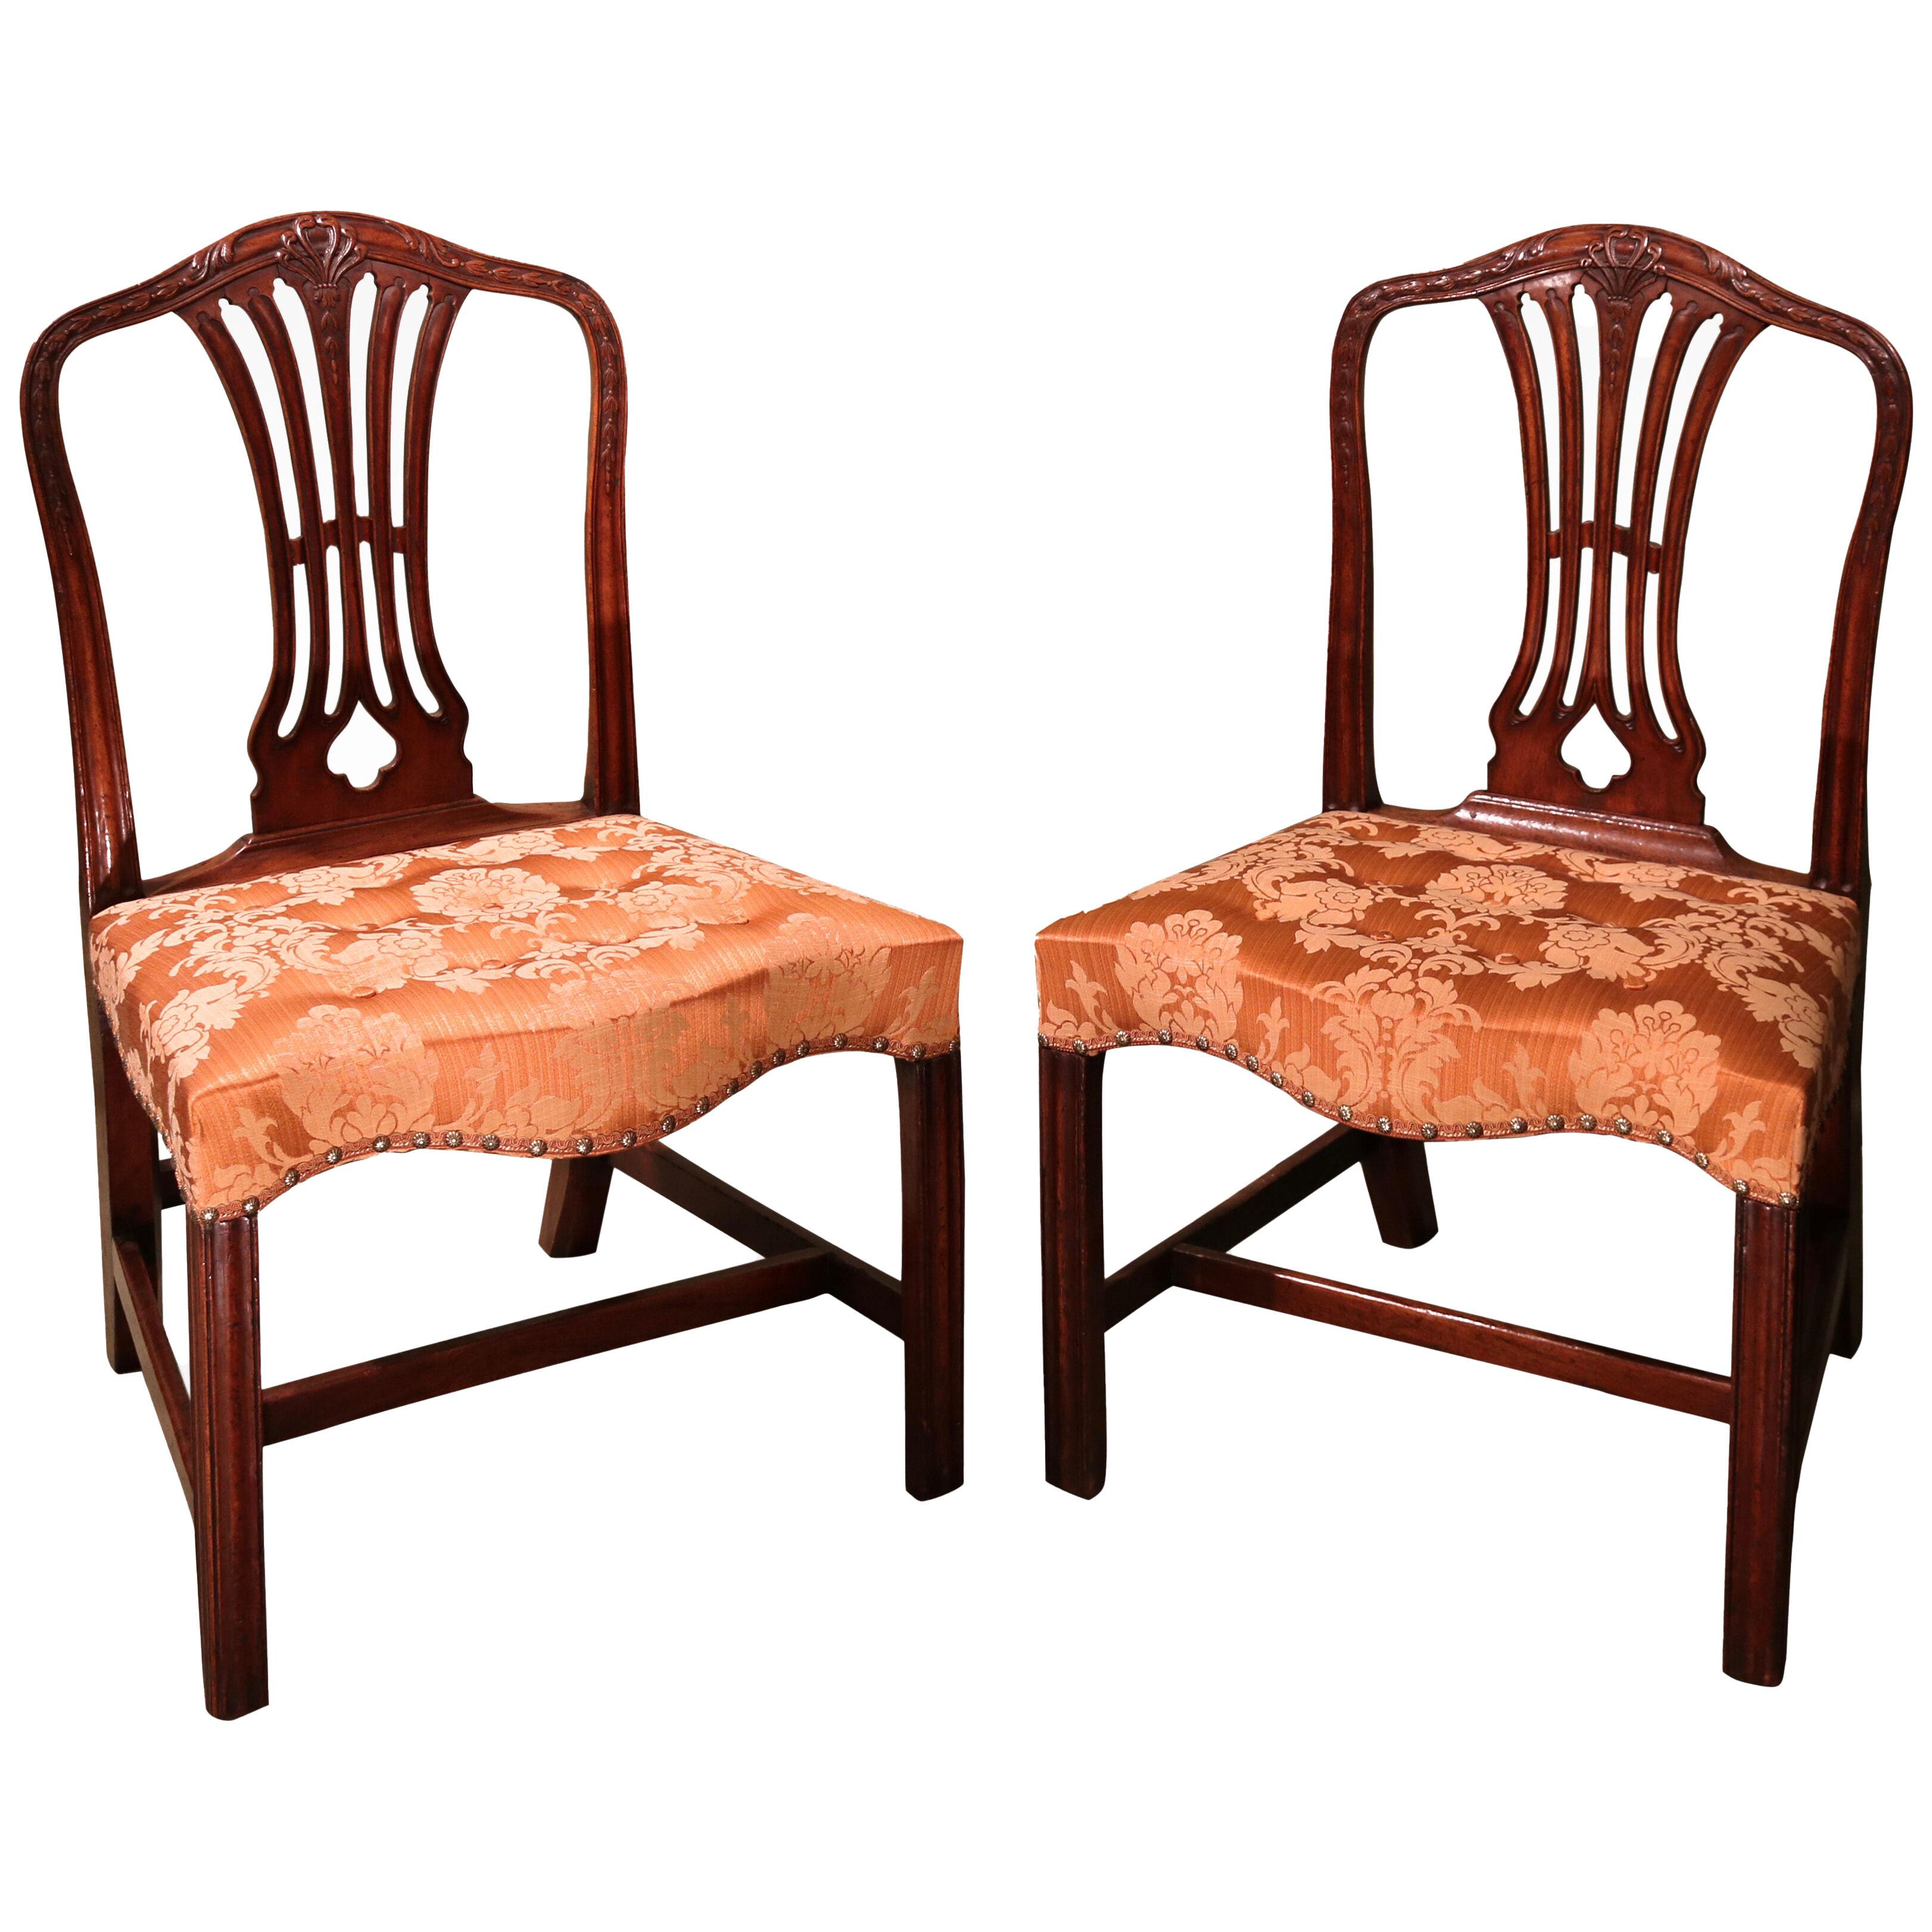 A pair of Hepplewhite period mahogany single chairs